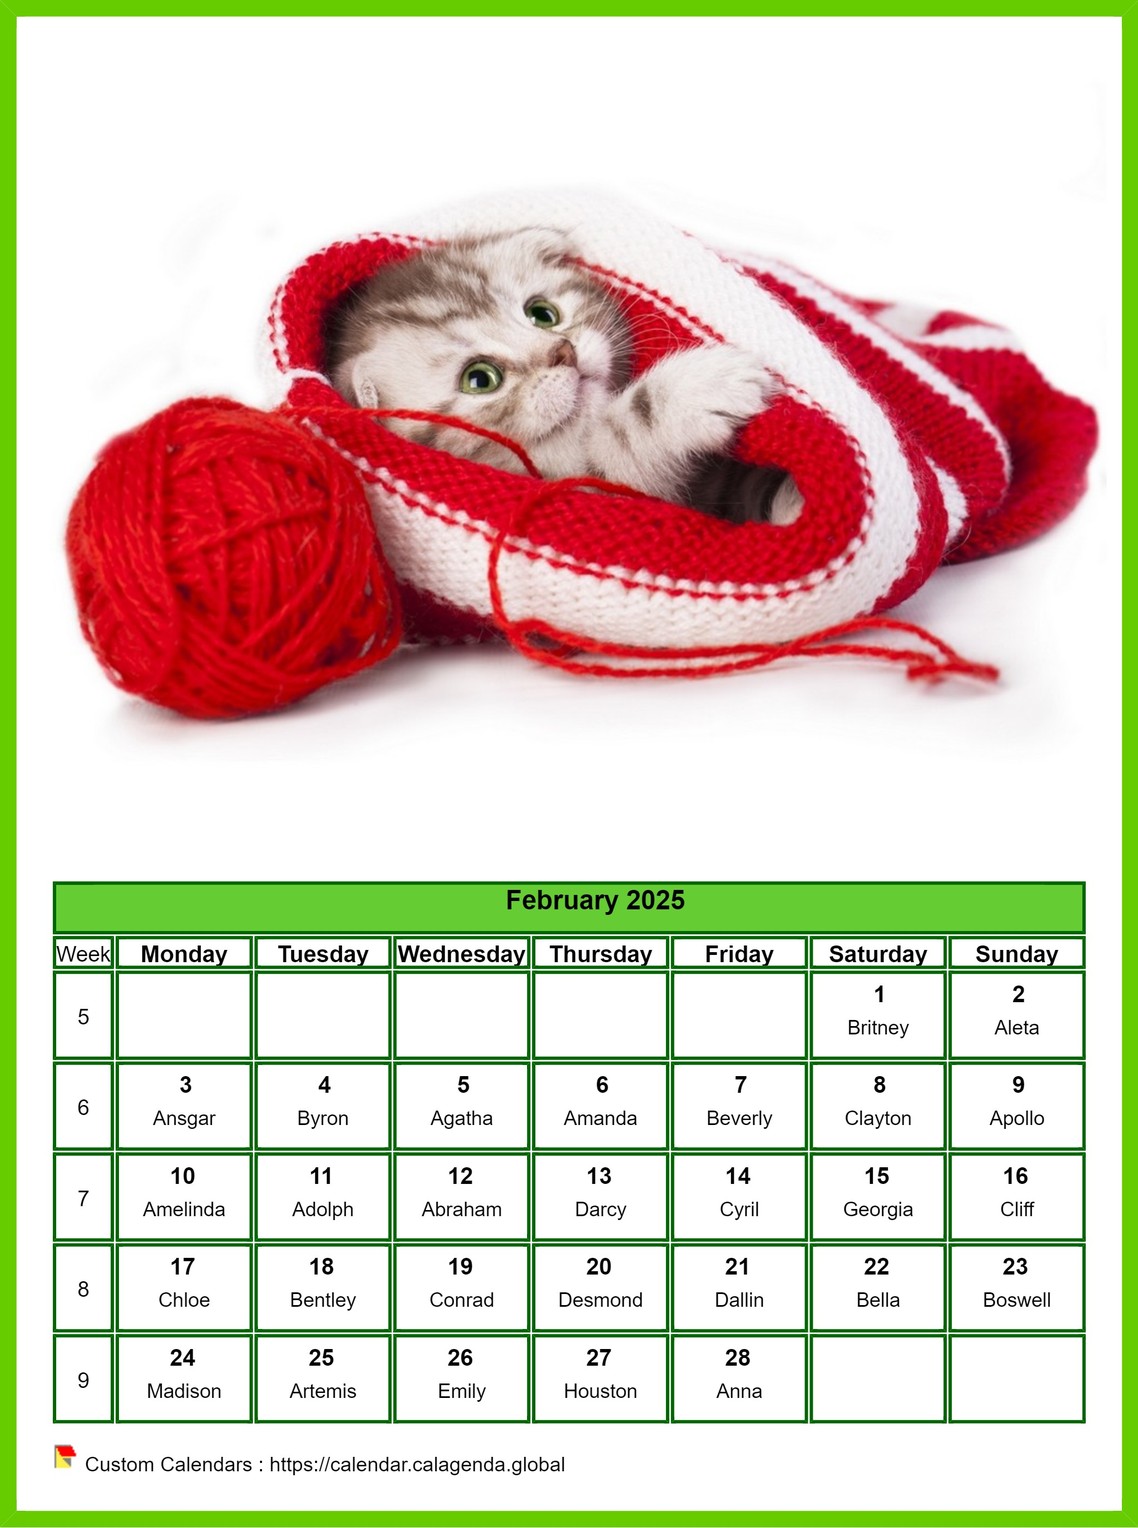 Calendar February 2025 cats